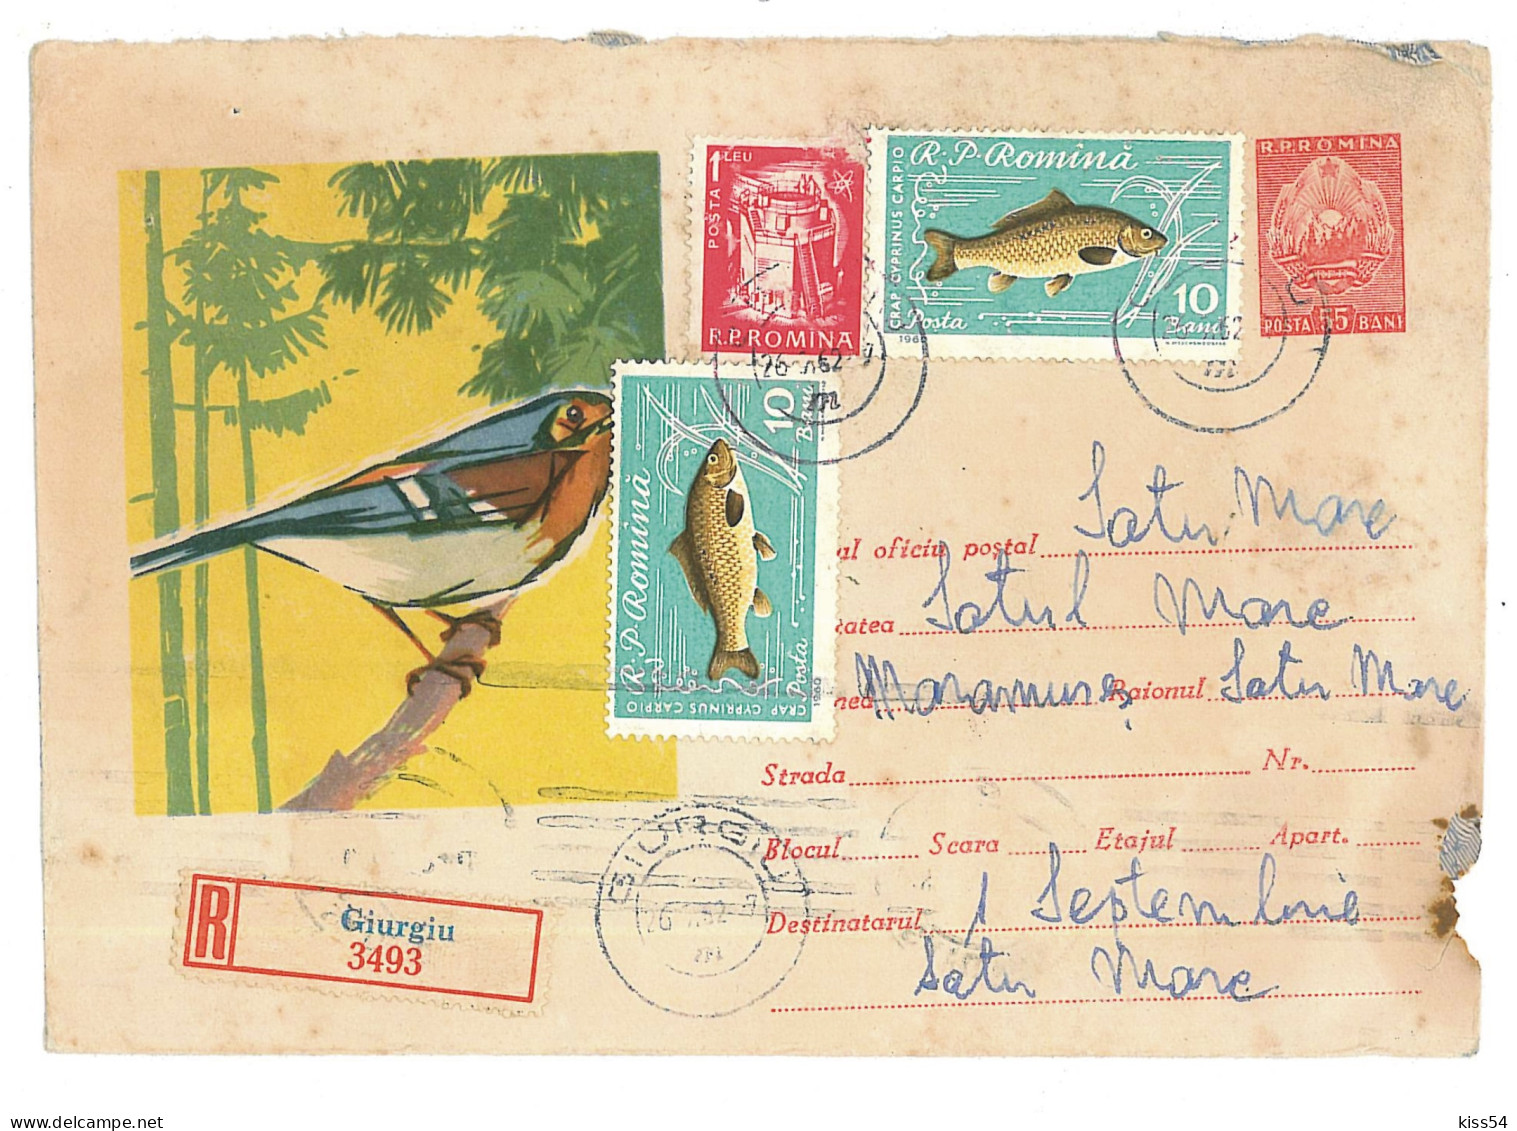 IP 62 - 0155 BIRD, Romania - Registered Stationery - Used - 1962 - Picchio & Uccelli Scalatori